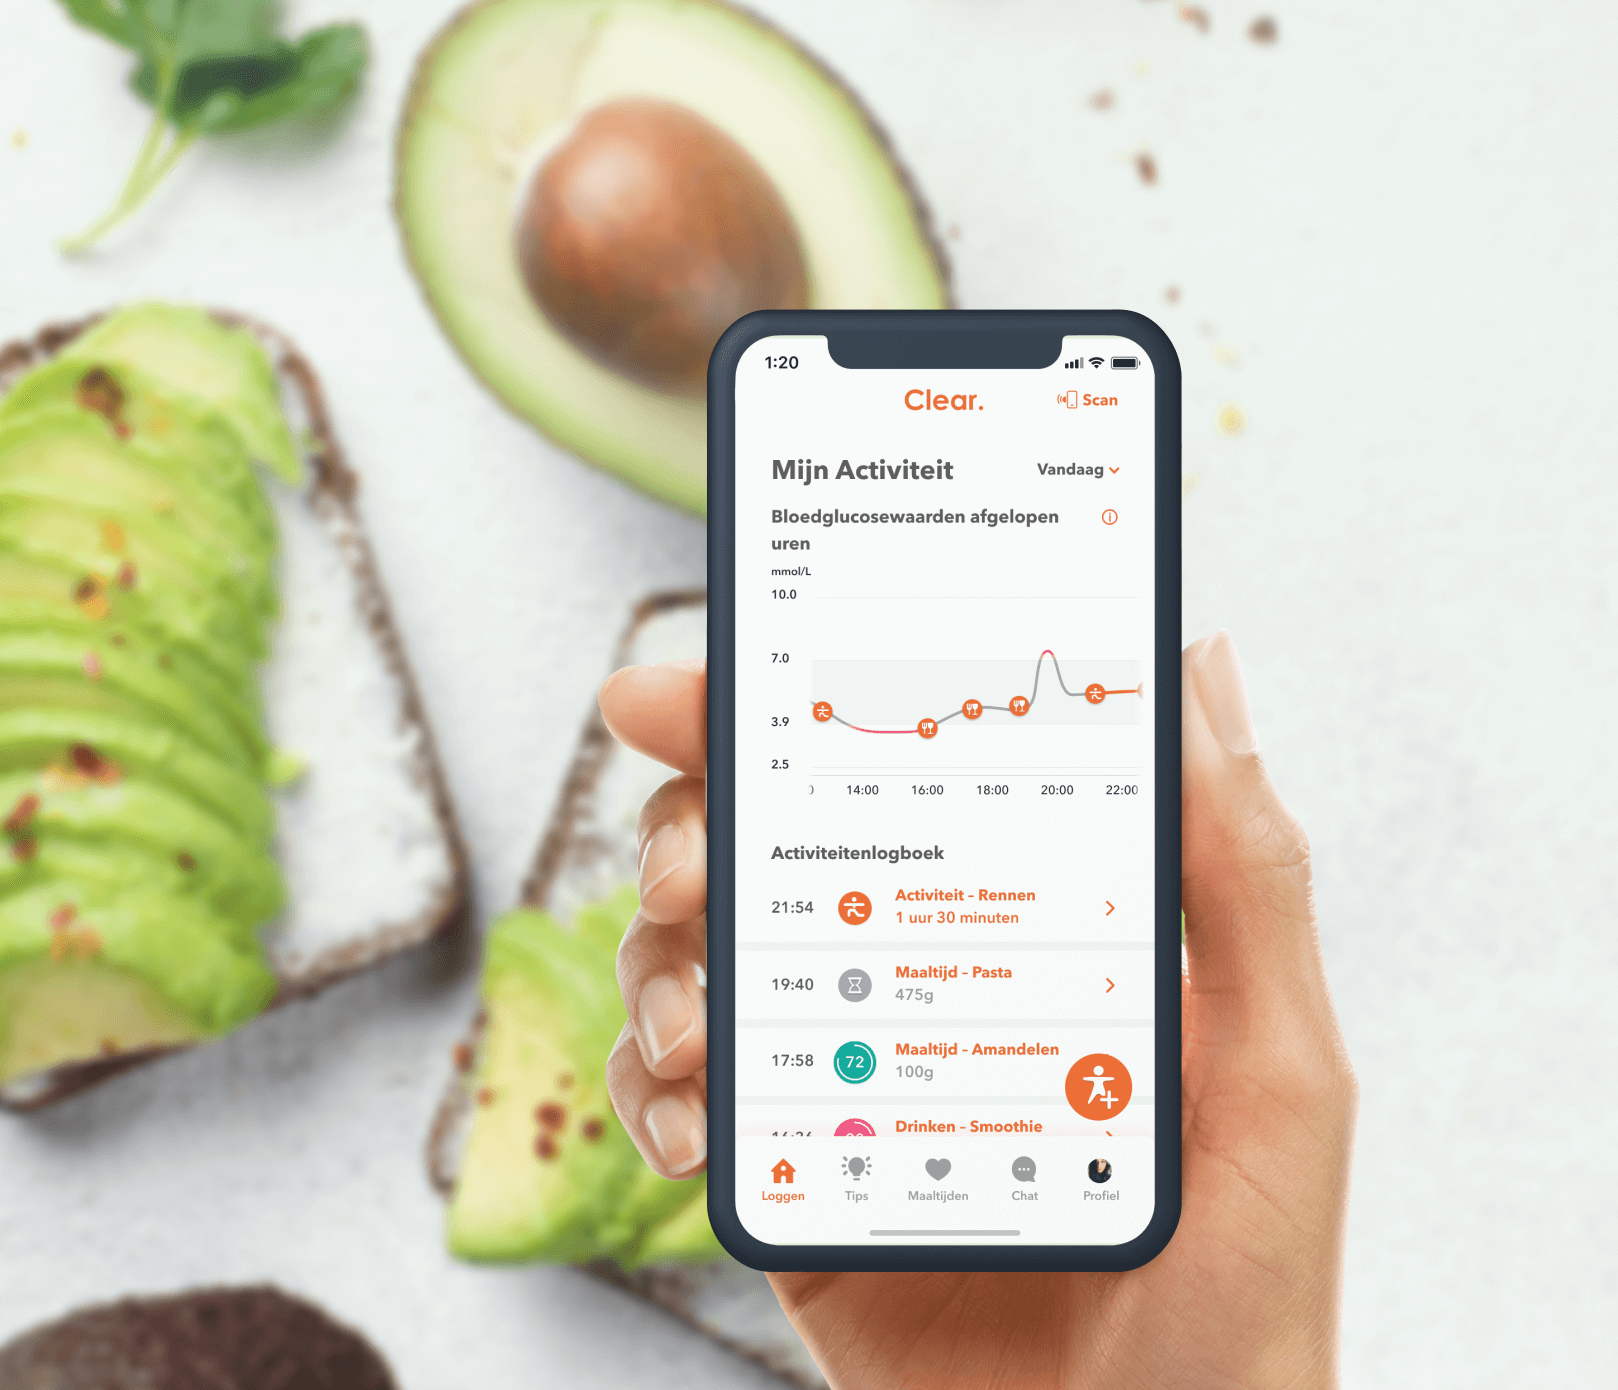 Persoon houdt glucosewaarden in de gaten via mobiele app